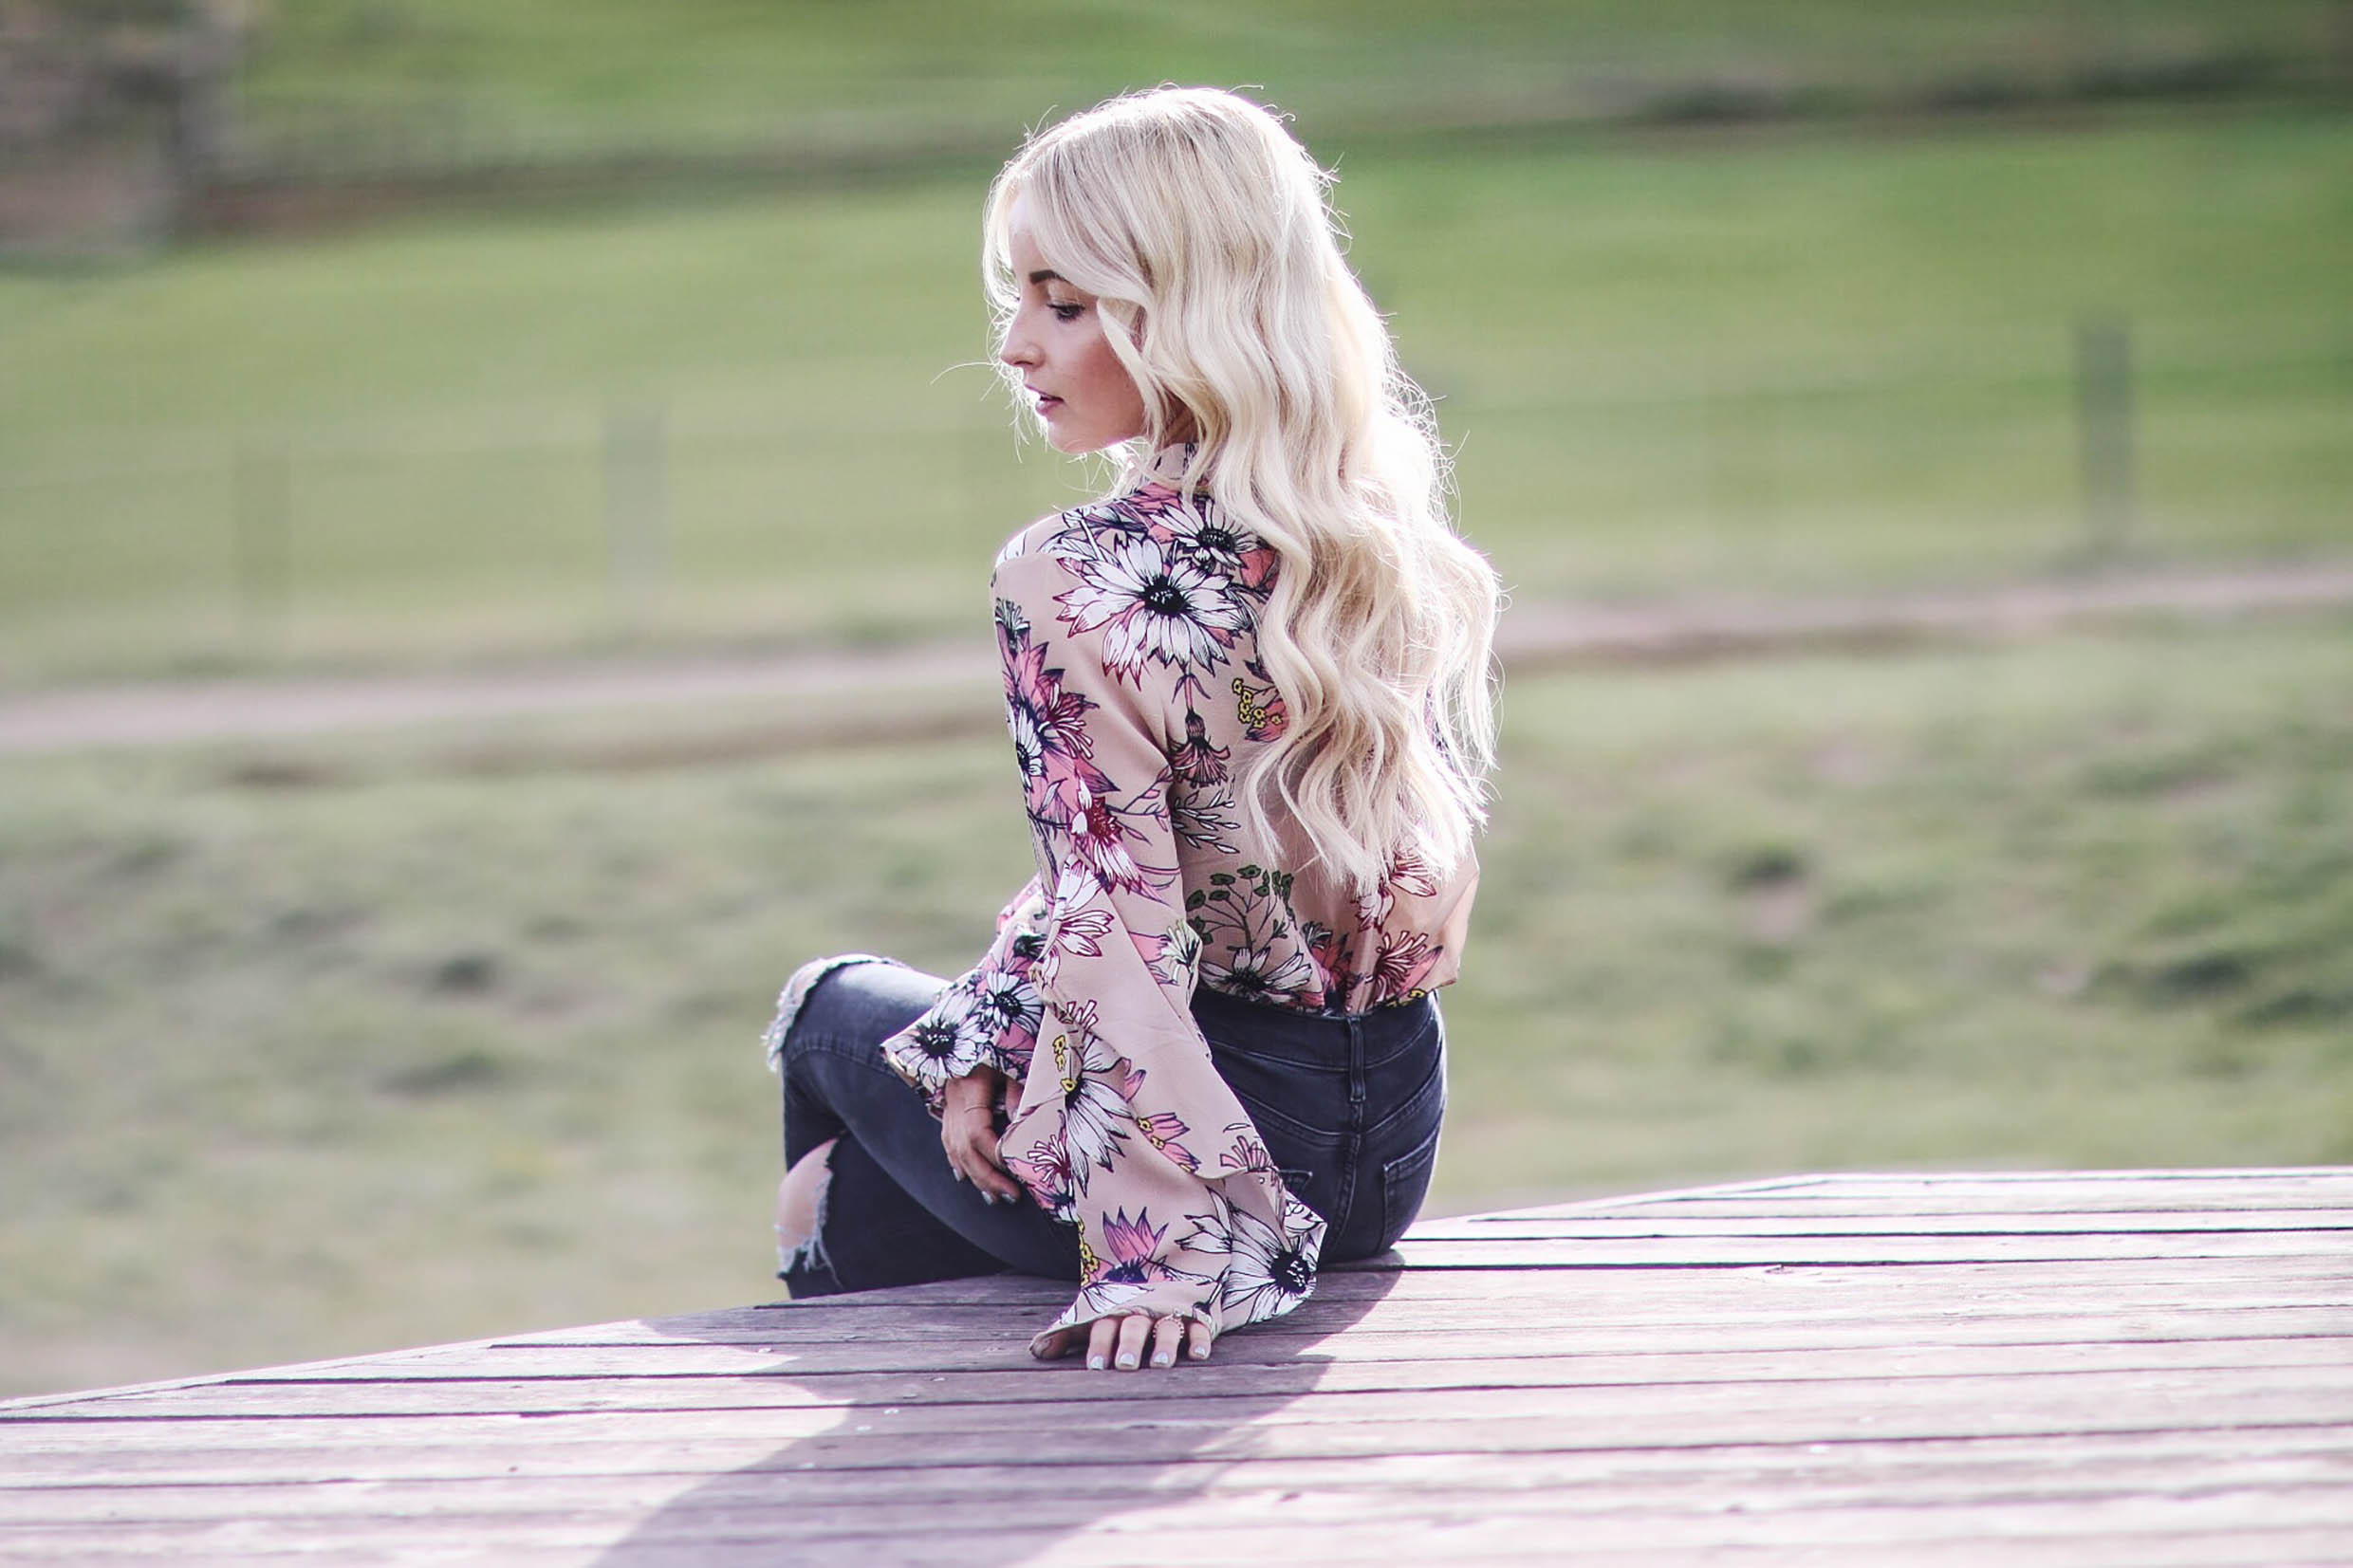 Alena Gidenko of modaprints.com styles a floral ruffled top with dark grey skinny jeans